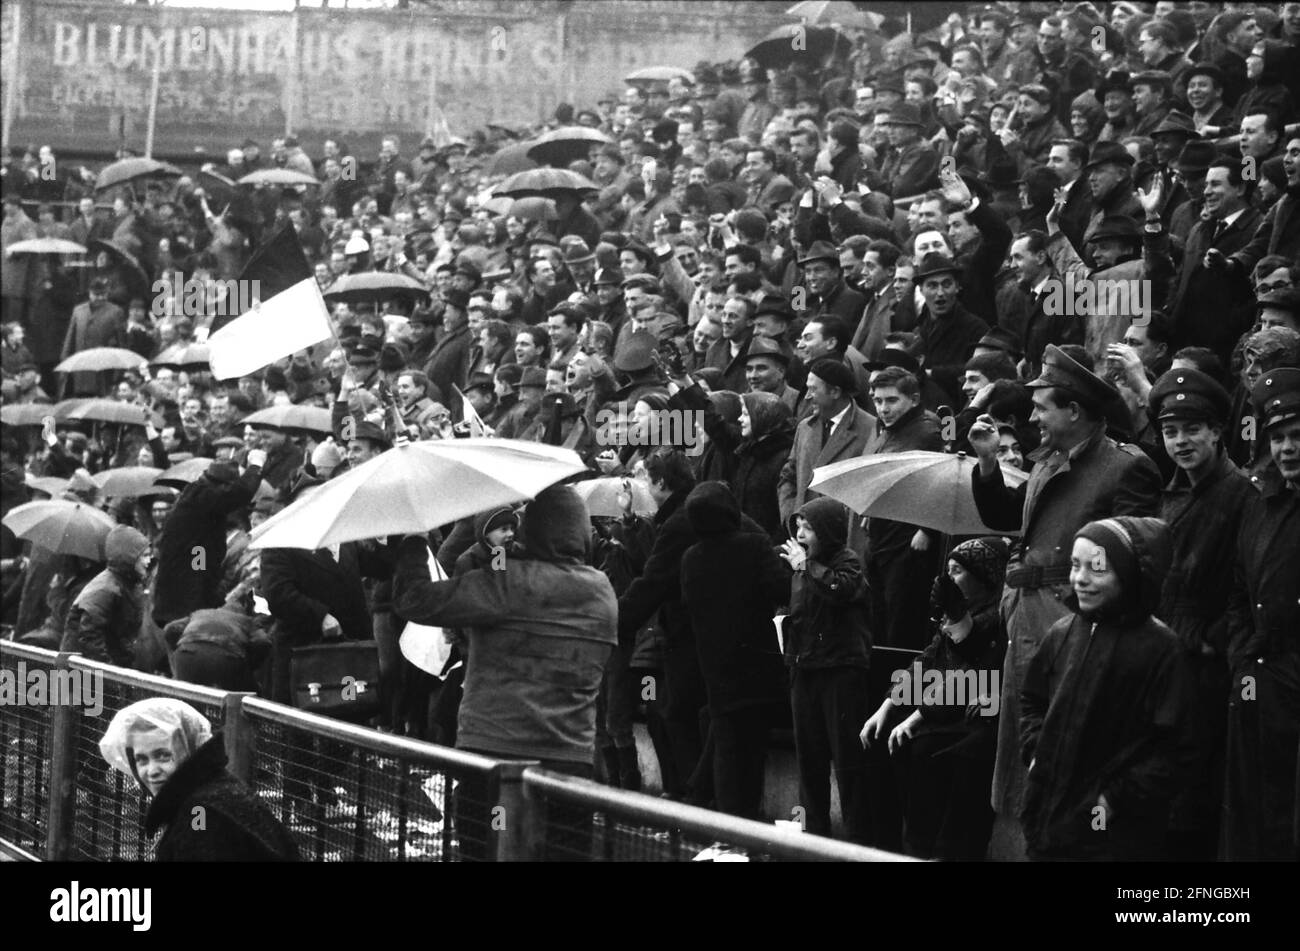 Borussia VfL Mönchengladbach - 1.FC Nuremberg 8:3 / 12.03.1966 / Borussia - fans celebrate one of the numerous goals, spectators [automated translation] Stock Photo